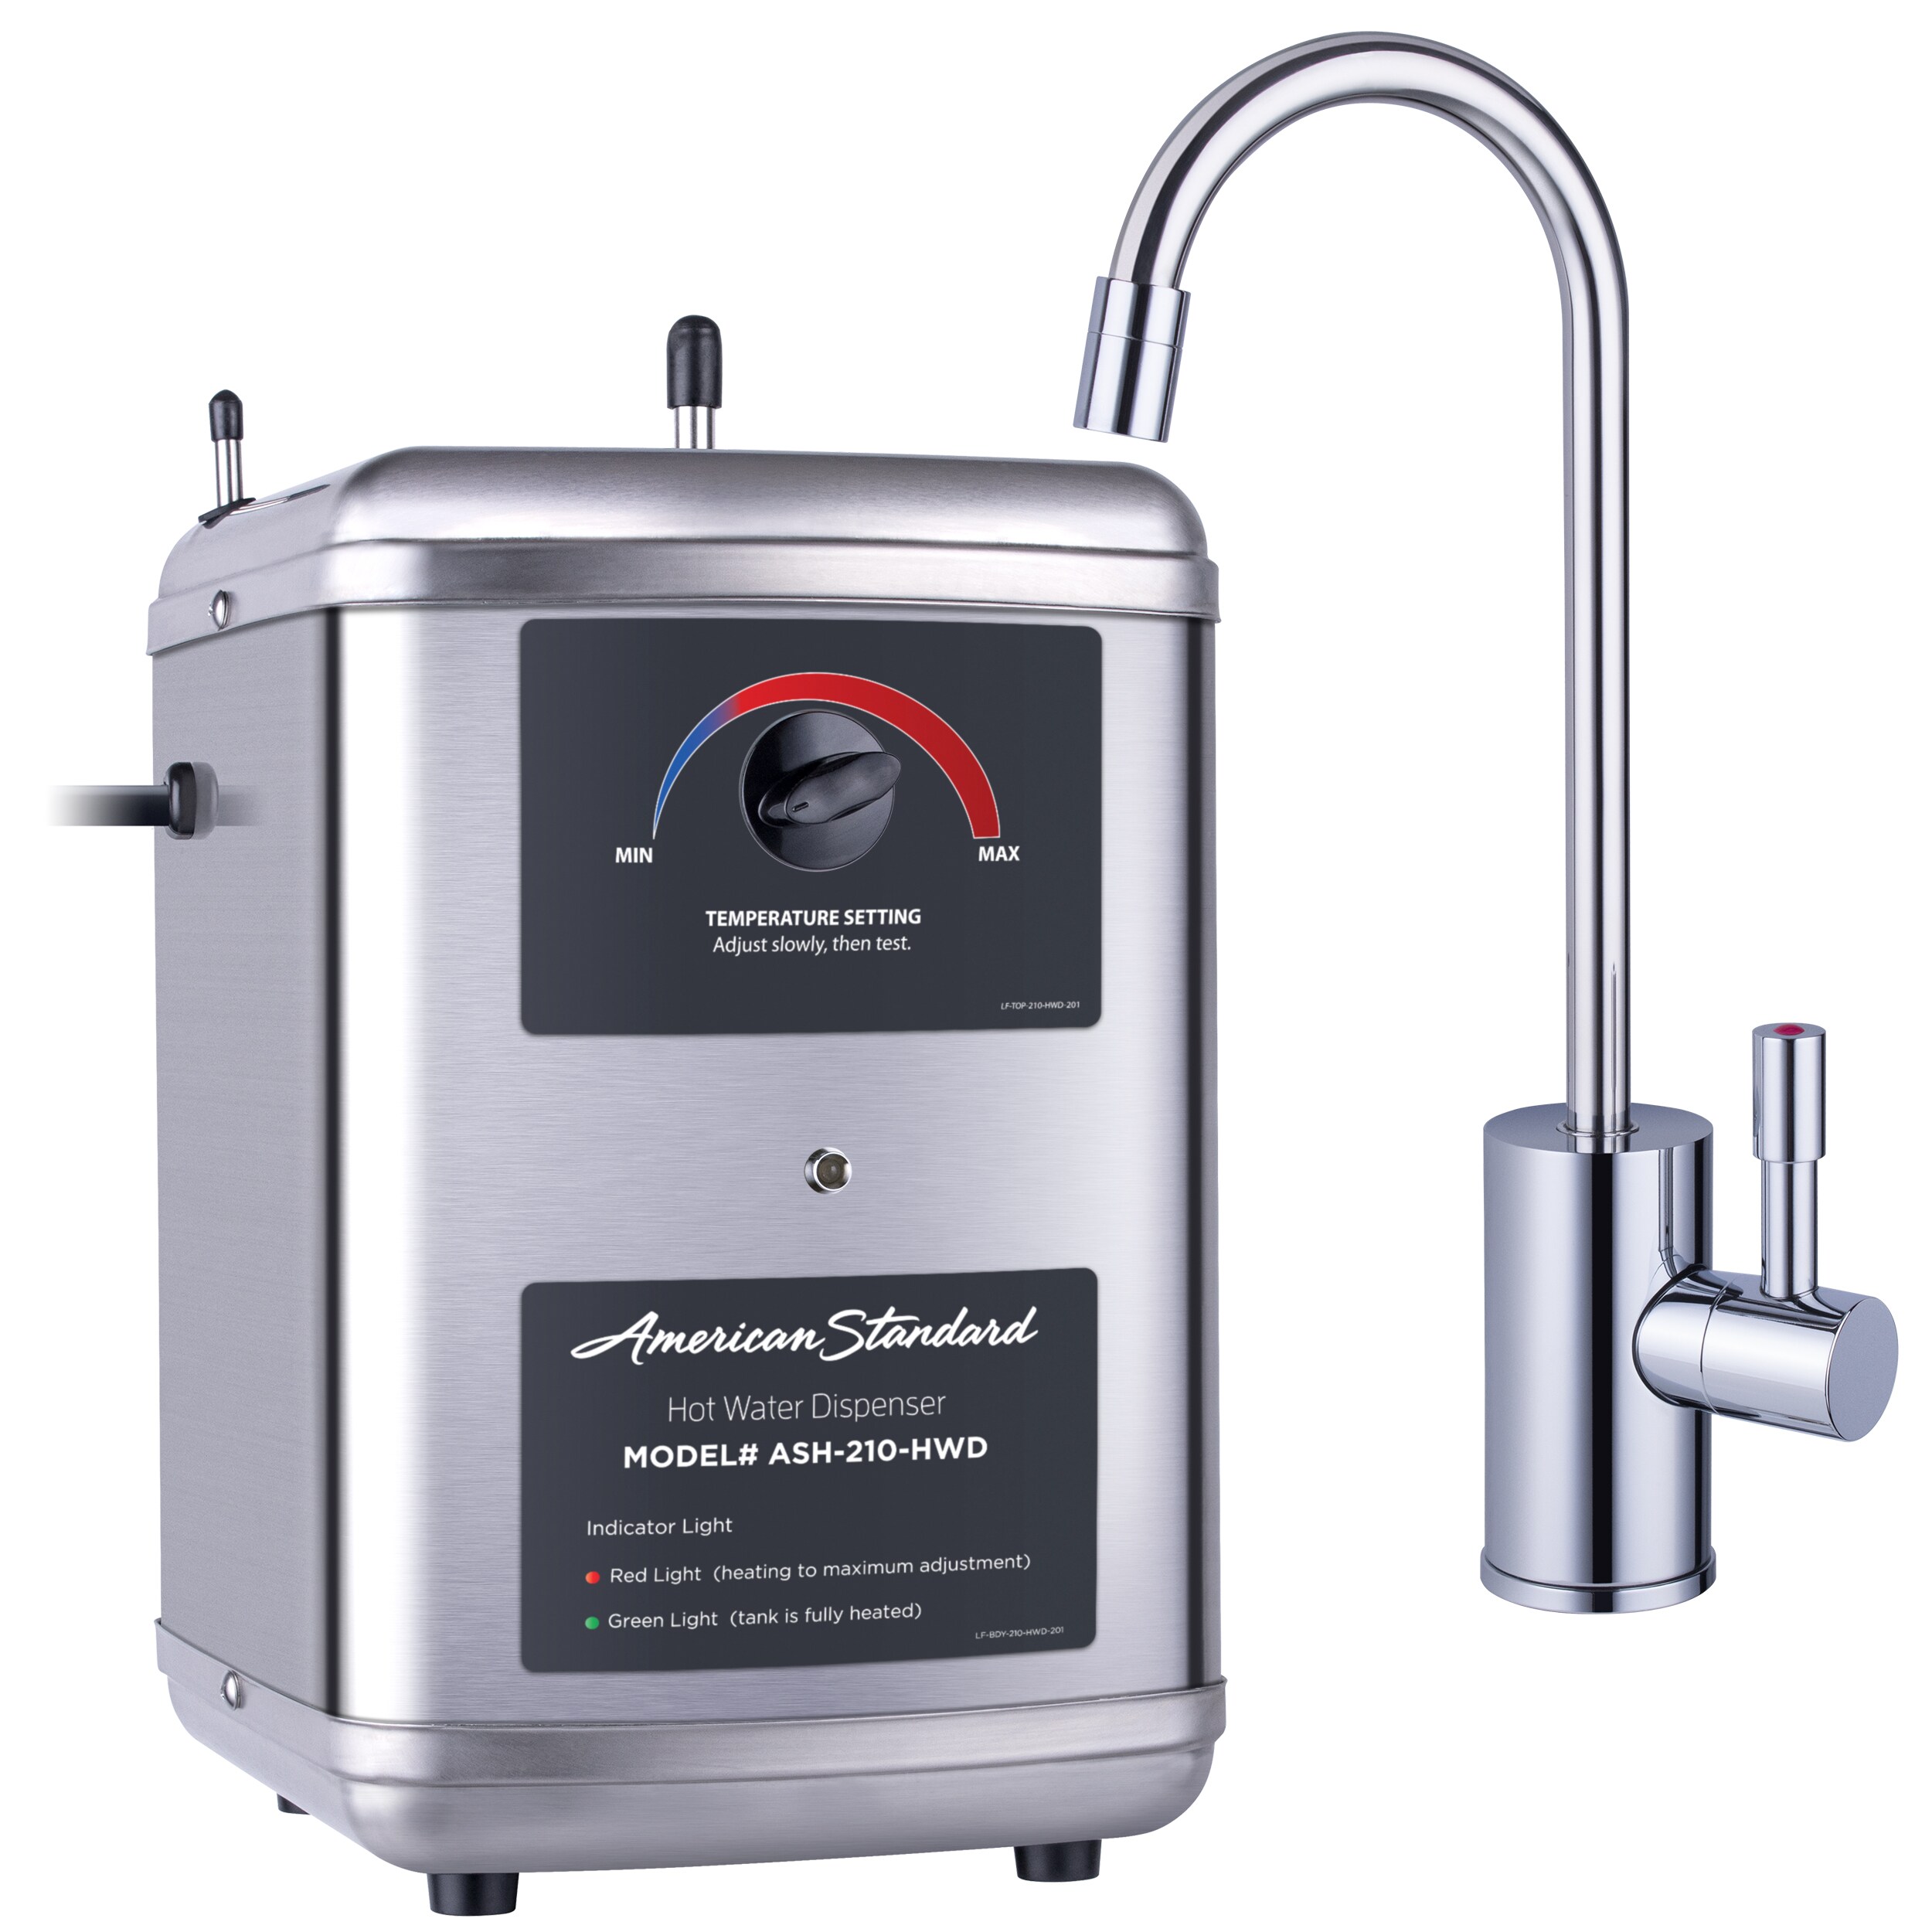  Sunbeam 6170 Hot Shot Hot Water Dispenser, White : Tools & Home  Improvement